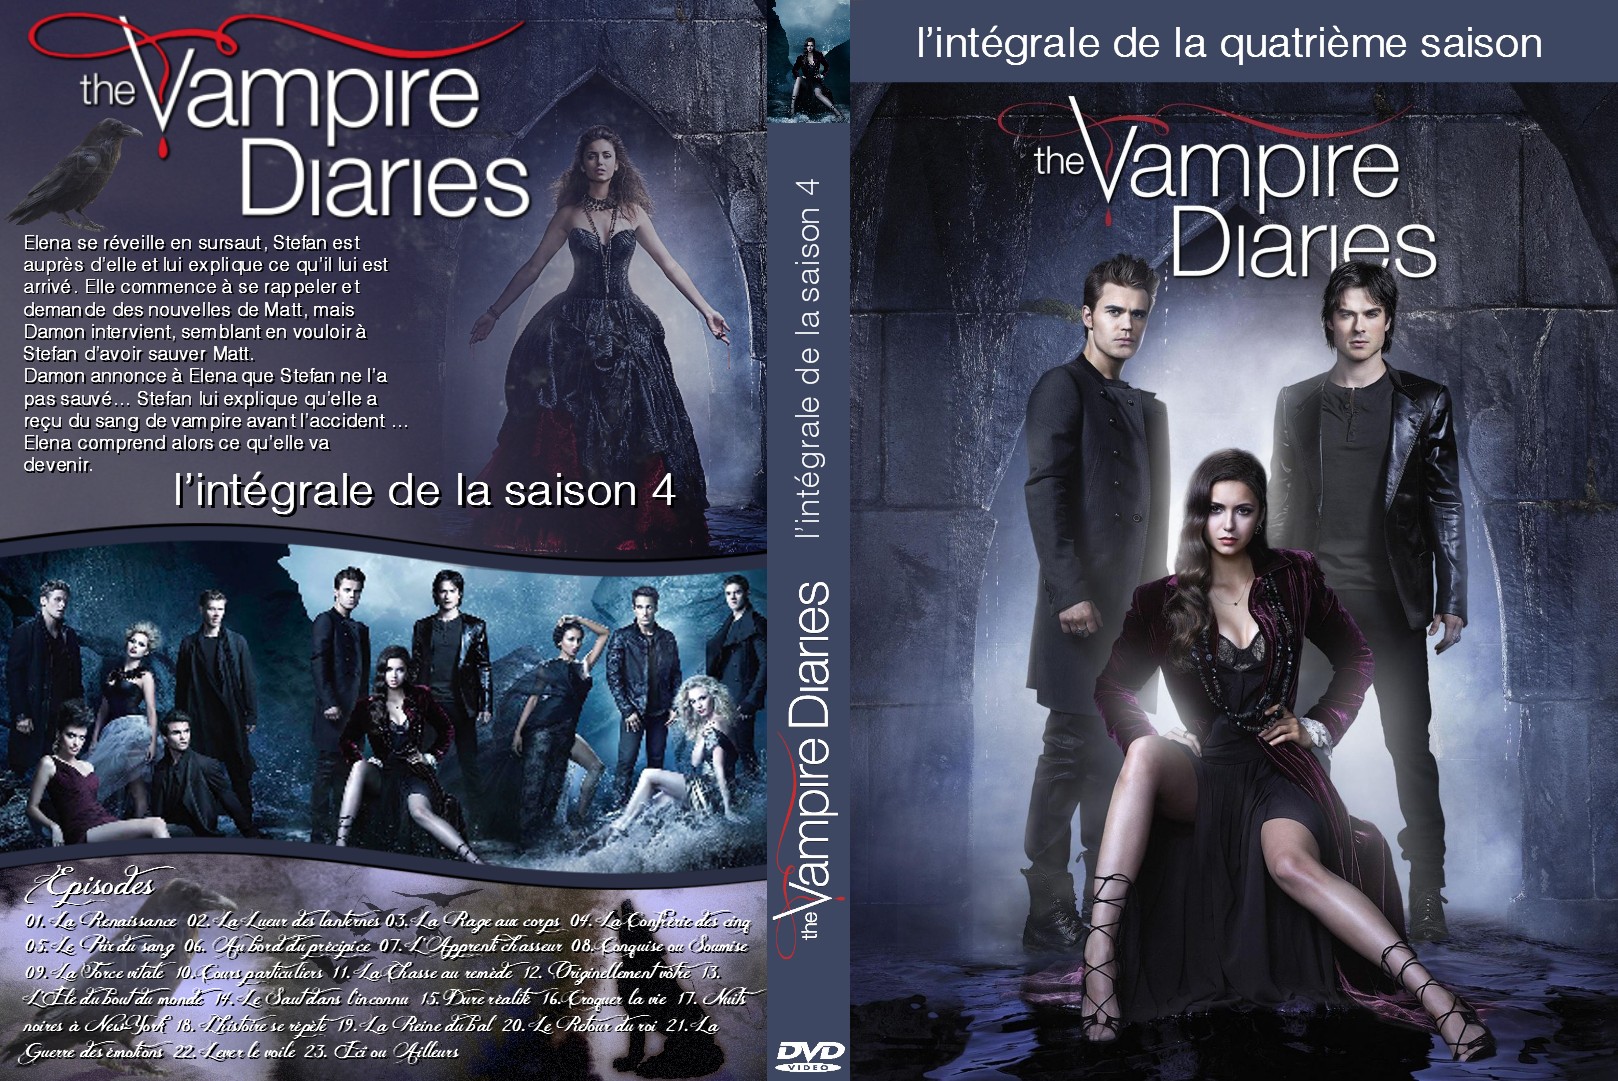 Jaquette DVD The vampire diaries Saison 4 custom